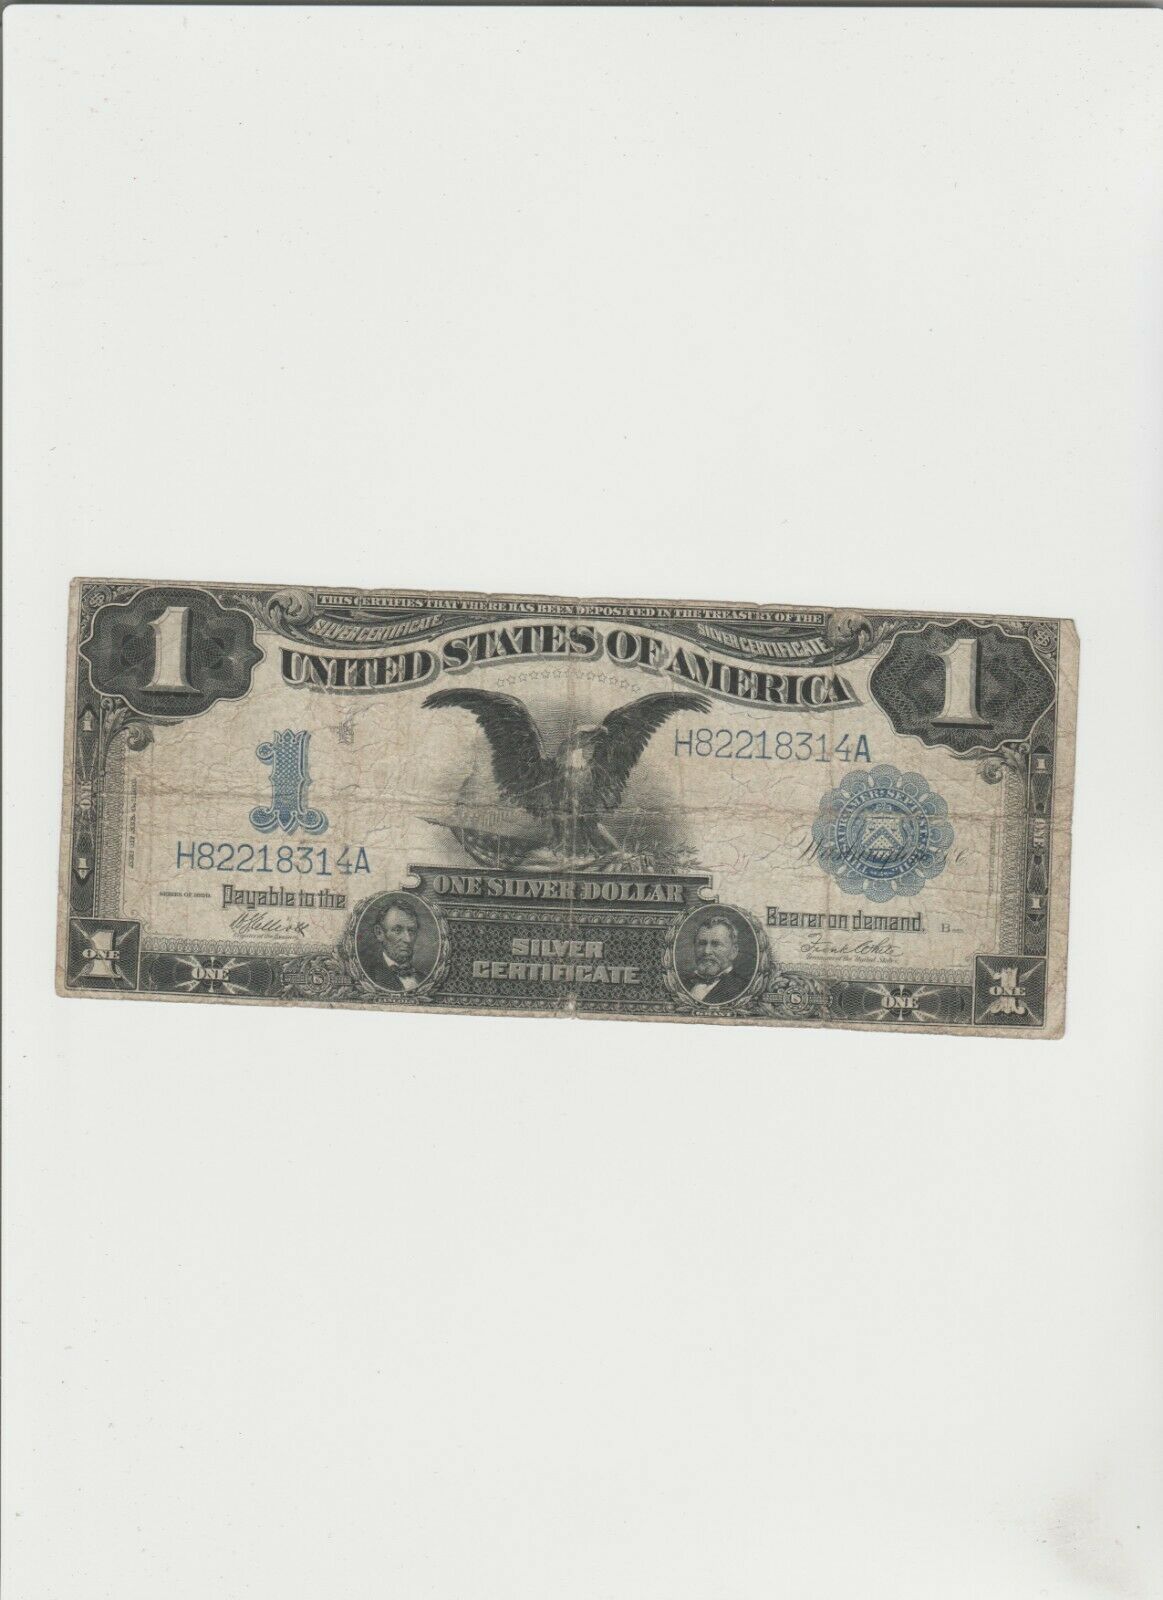 LARGE 1899 $1 DOLLAR BILL BLACK EAGLE NOTE BIG SILVER CERTIFICATE